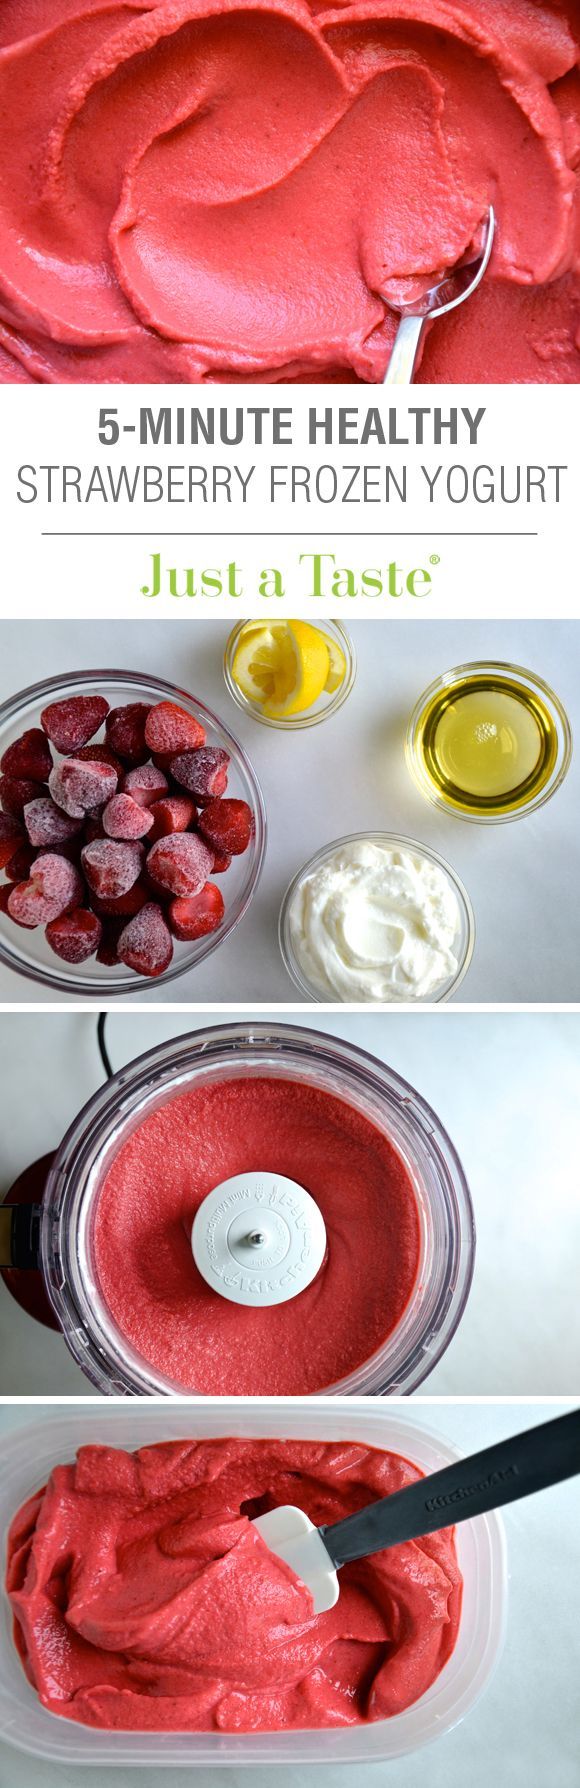 5-Minute Healthy Strawberry Frozen Yogurt #recipe on justataste.com